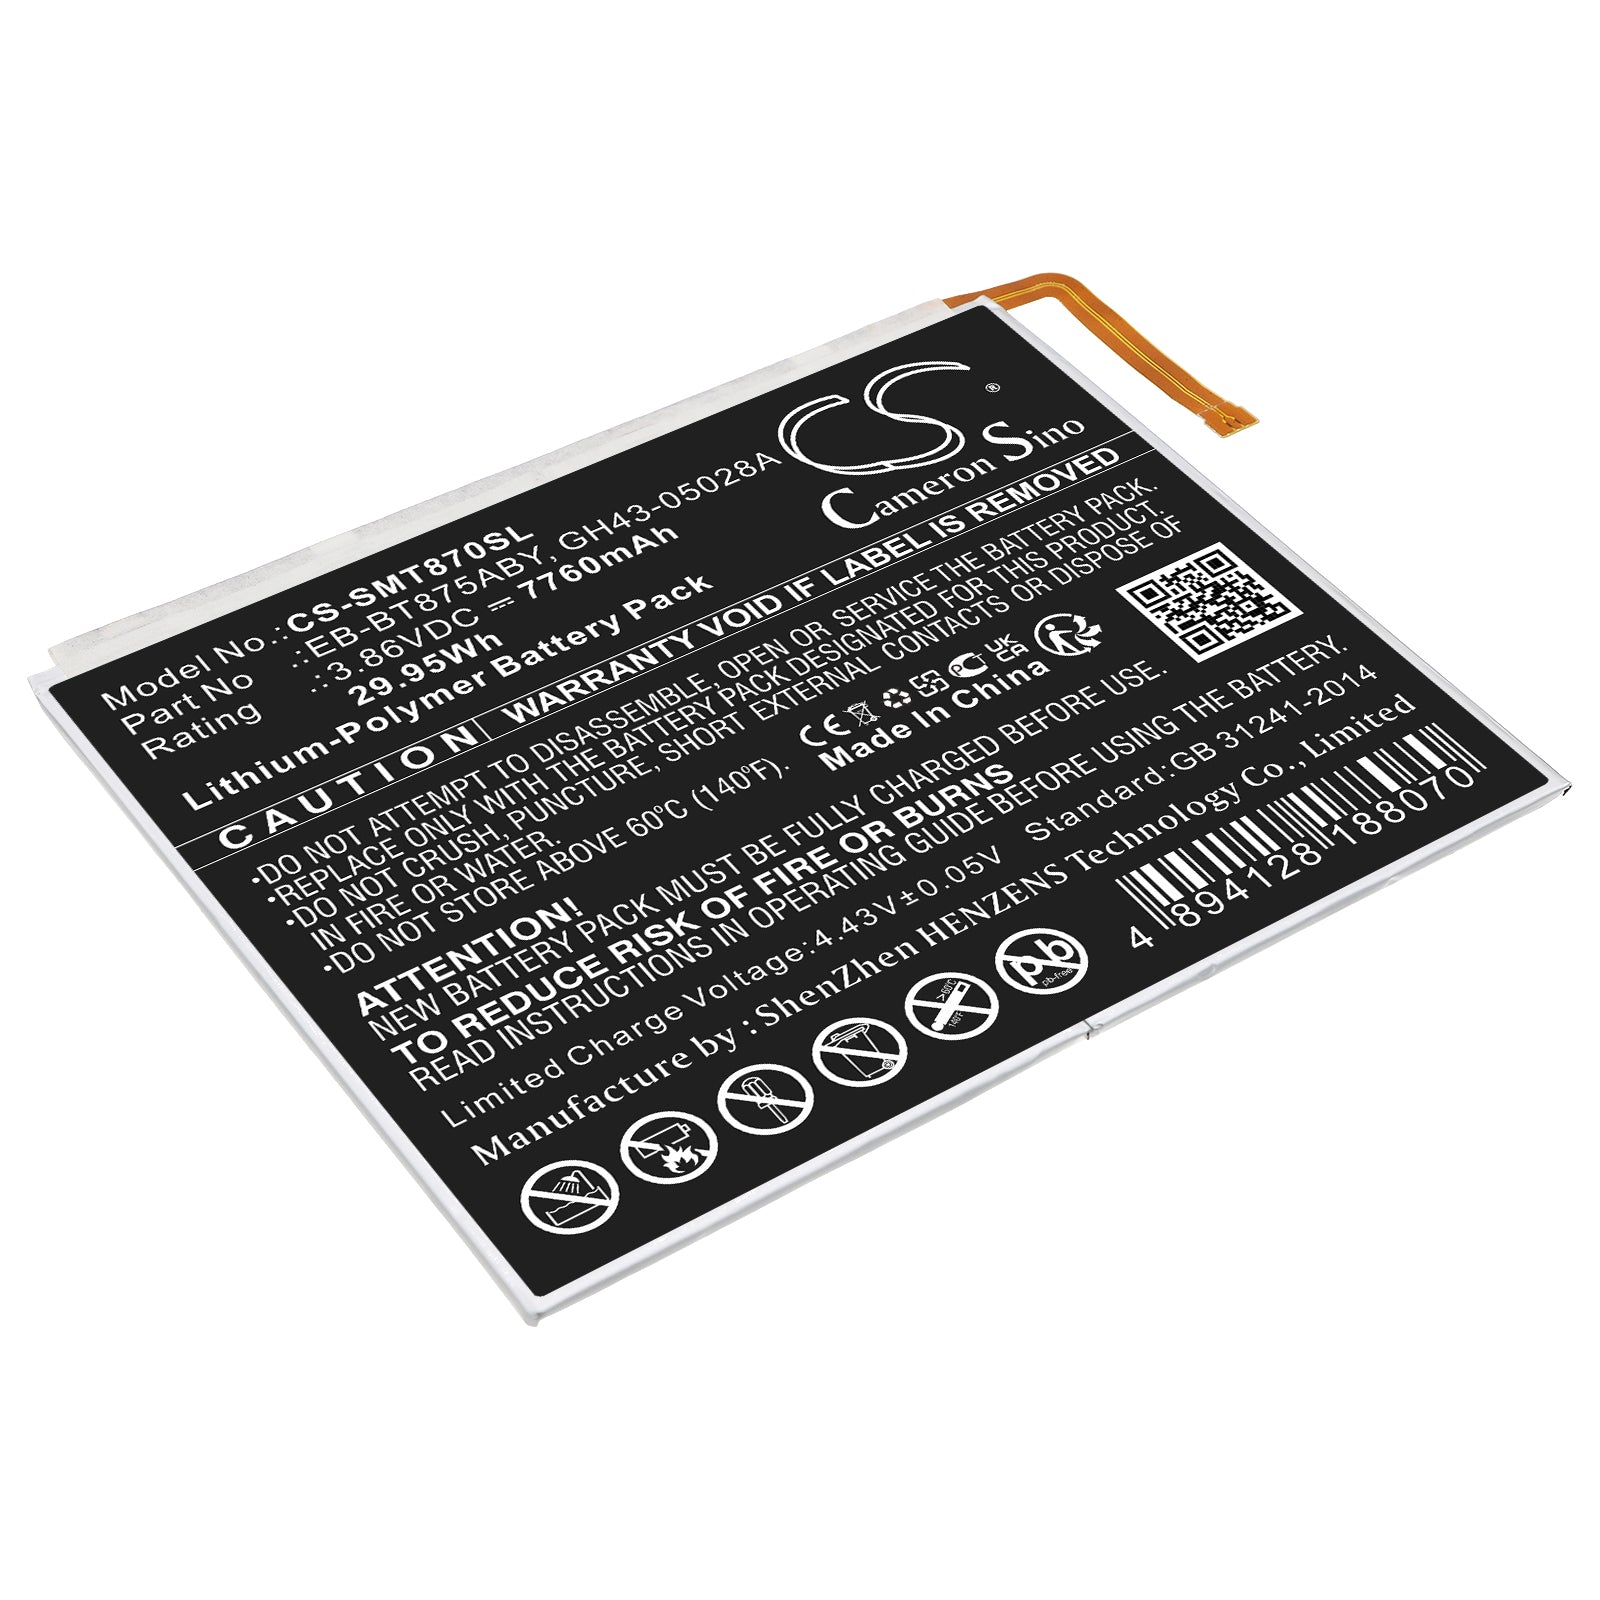 Galaxy Tab S7 11.0 SM-T870 Support & Manual